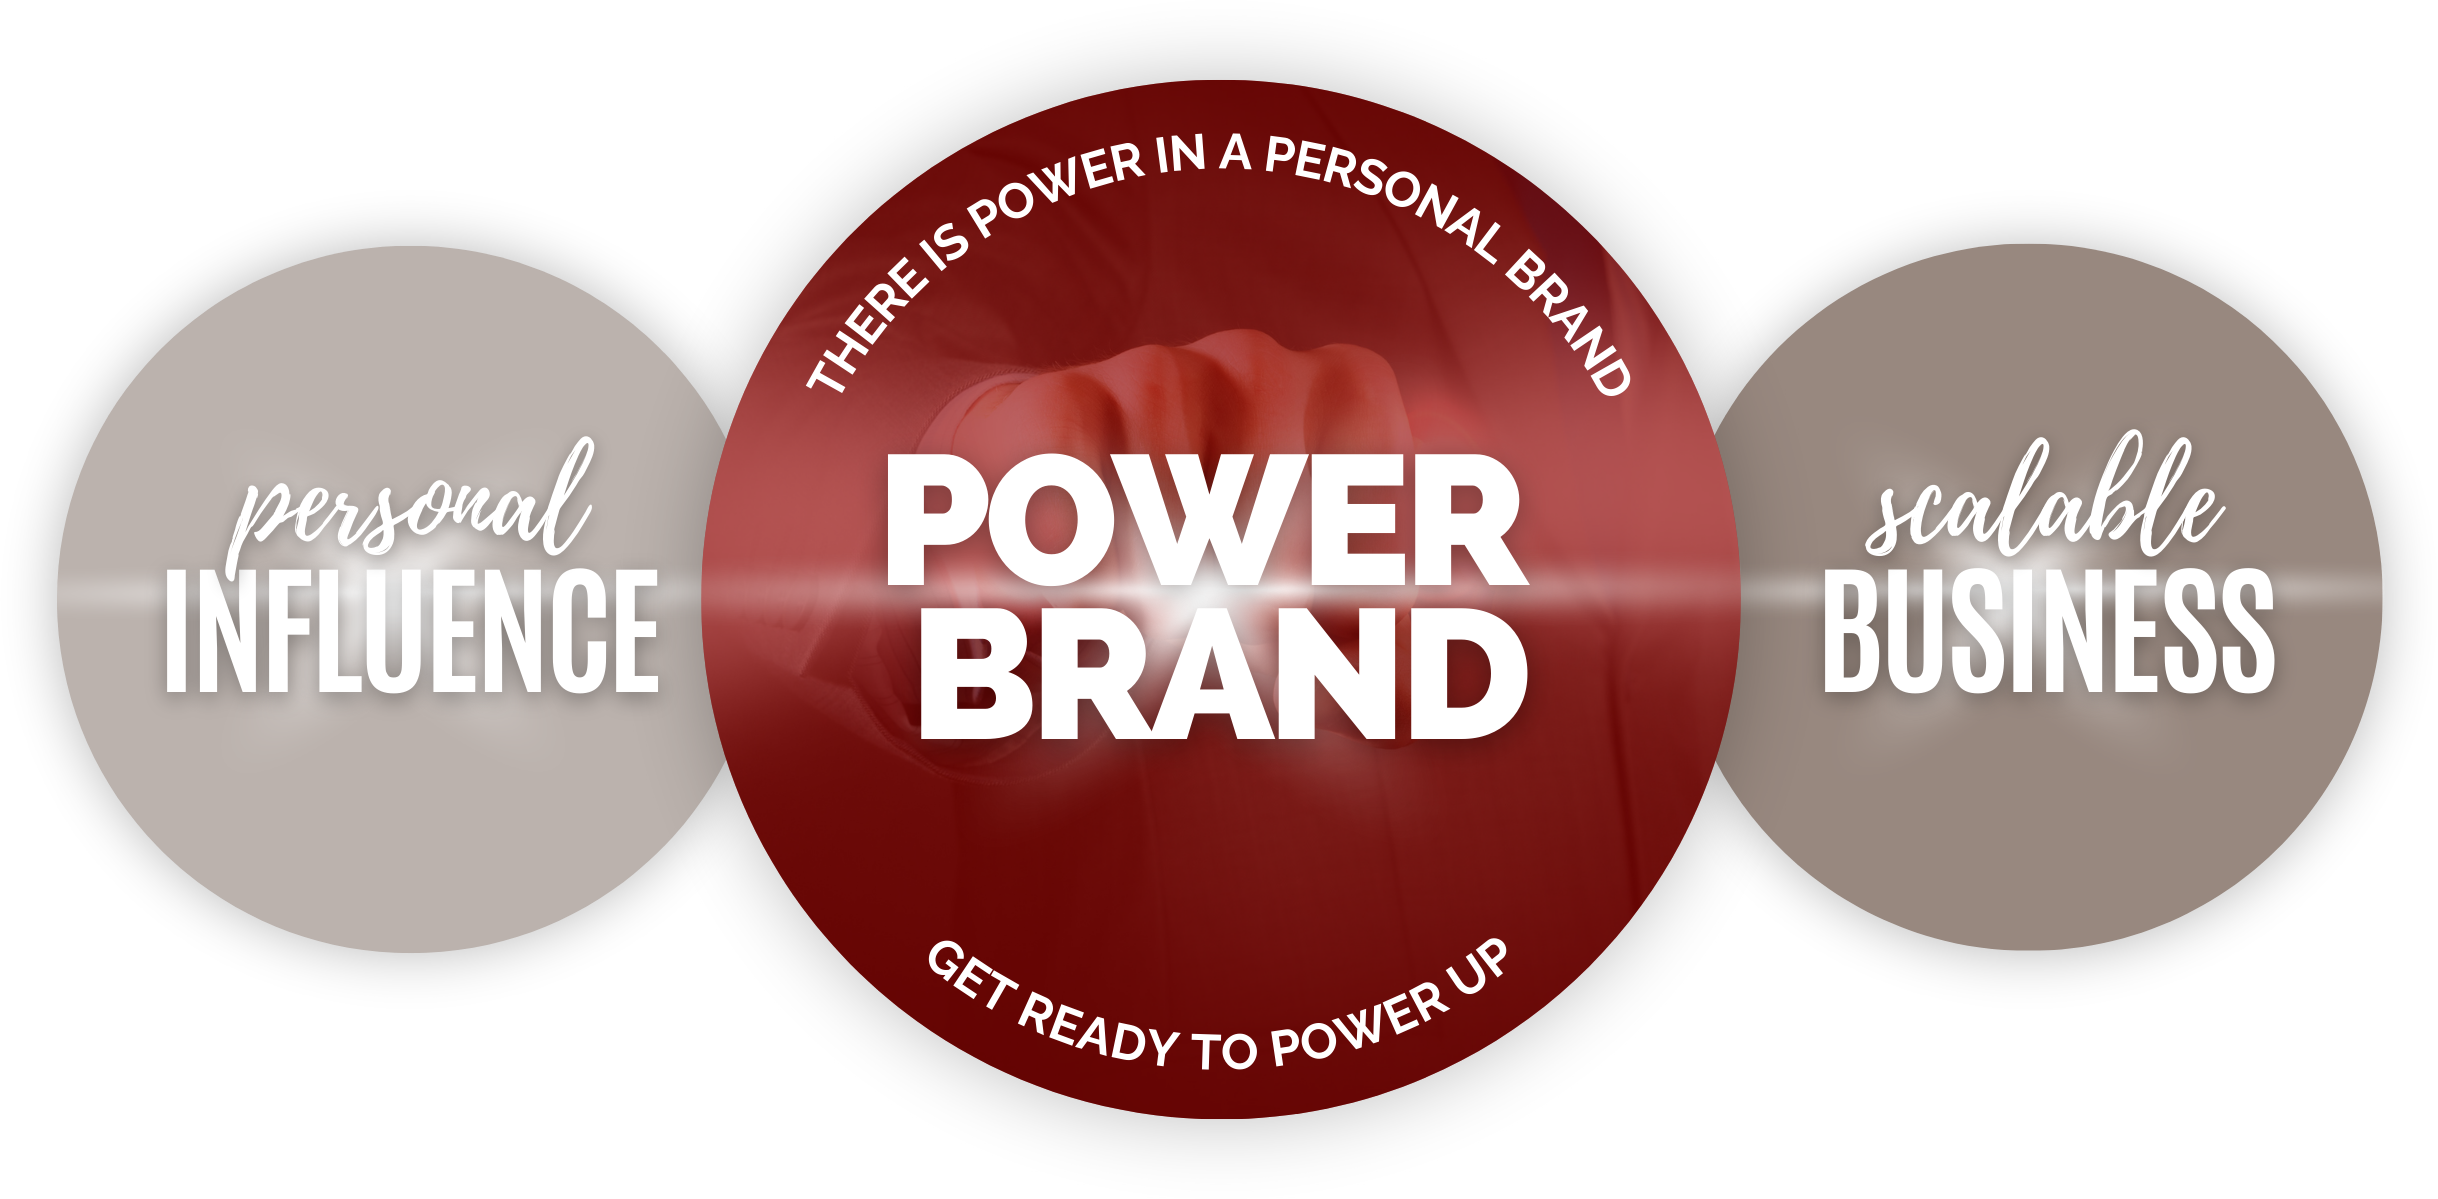 Power Brand Diagram